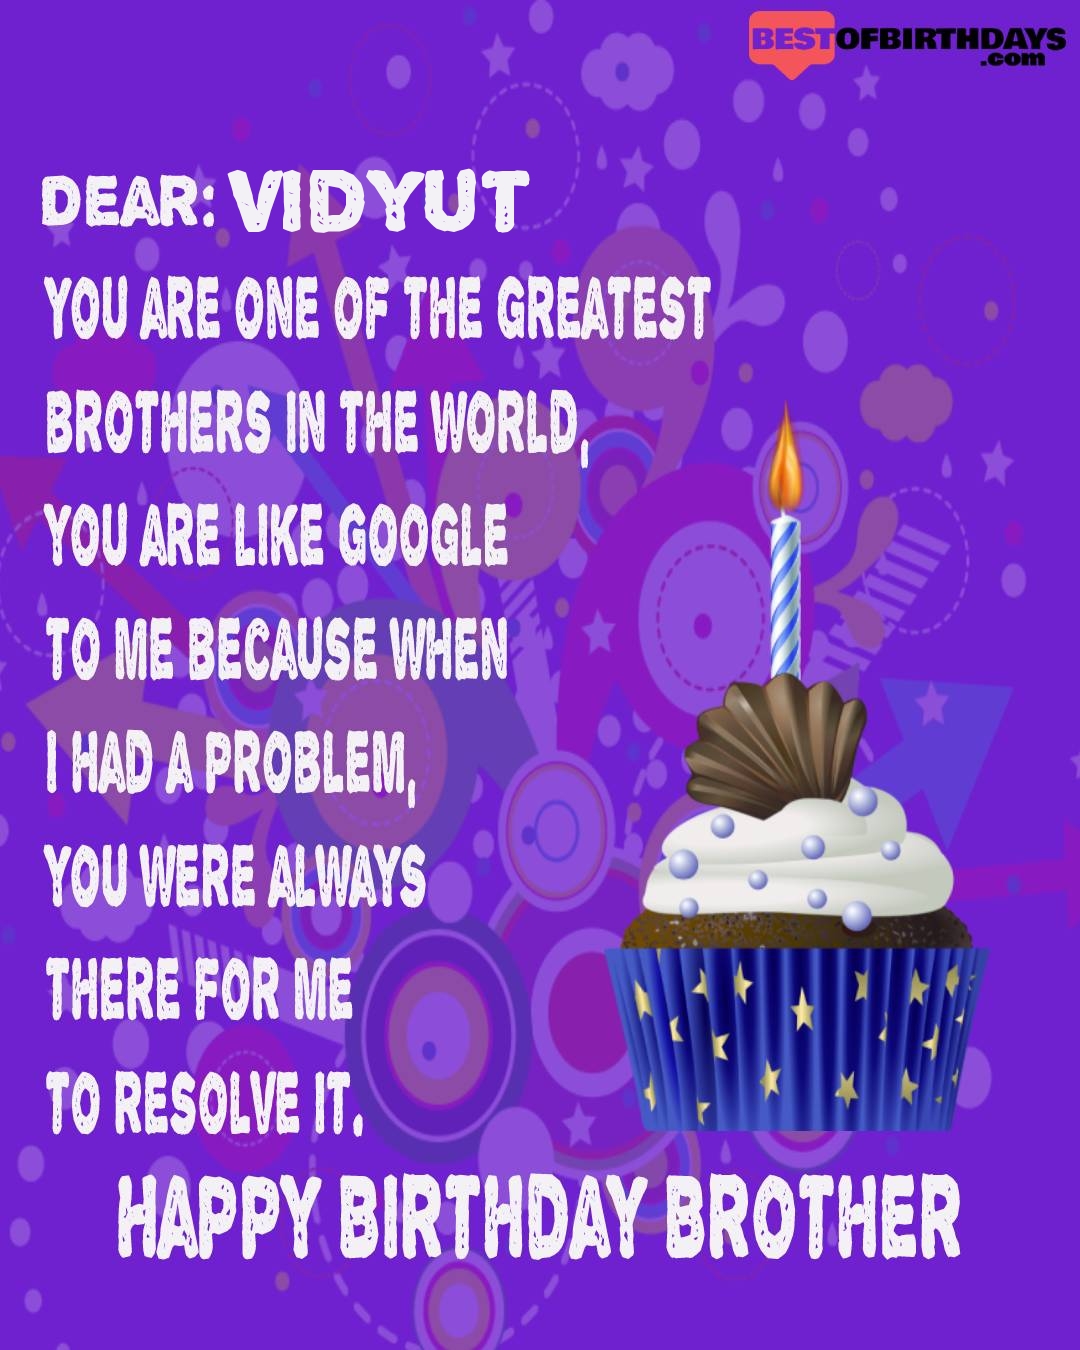 Happy birthday vidyut bhai brother bro